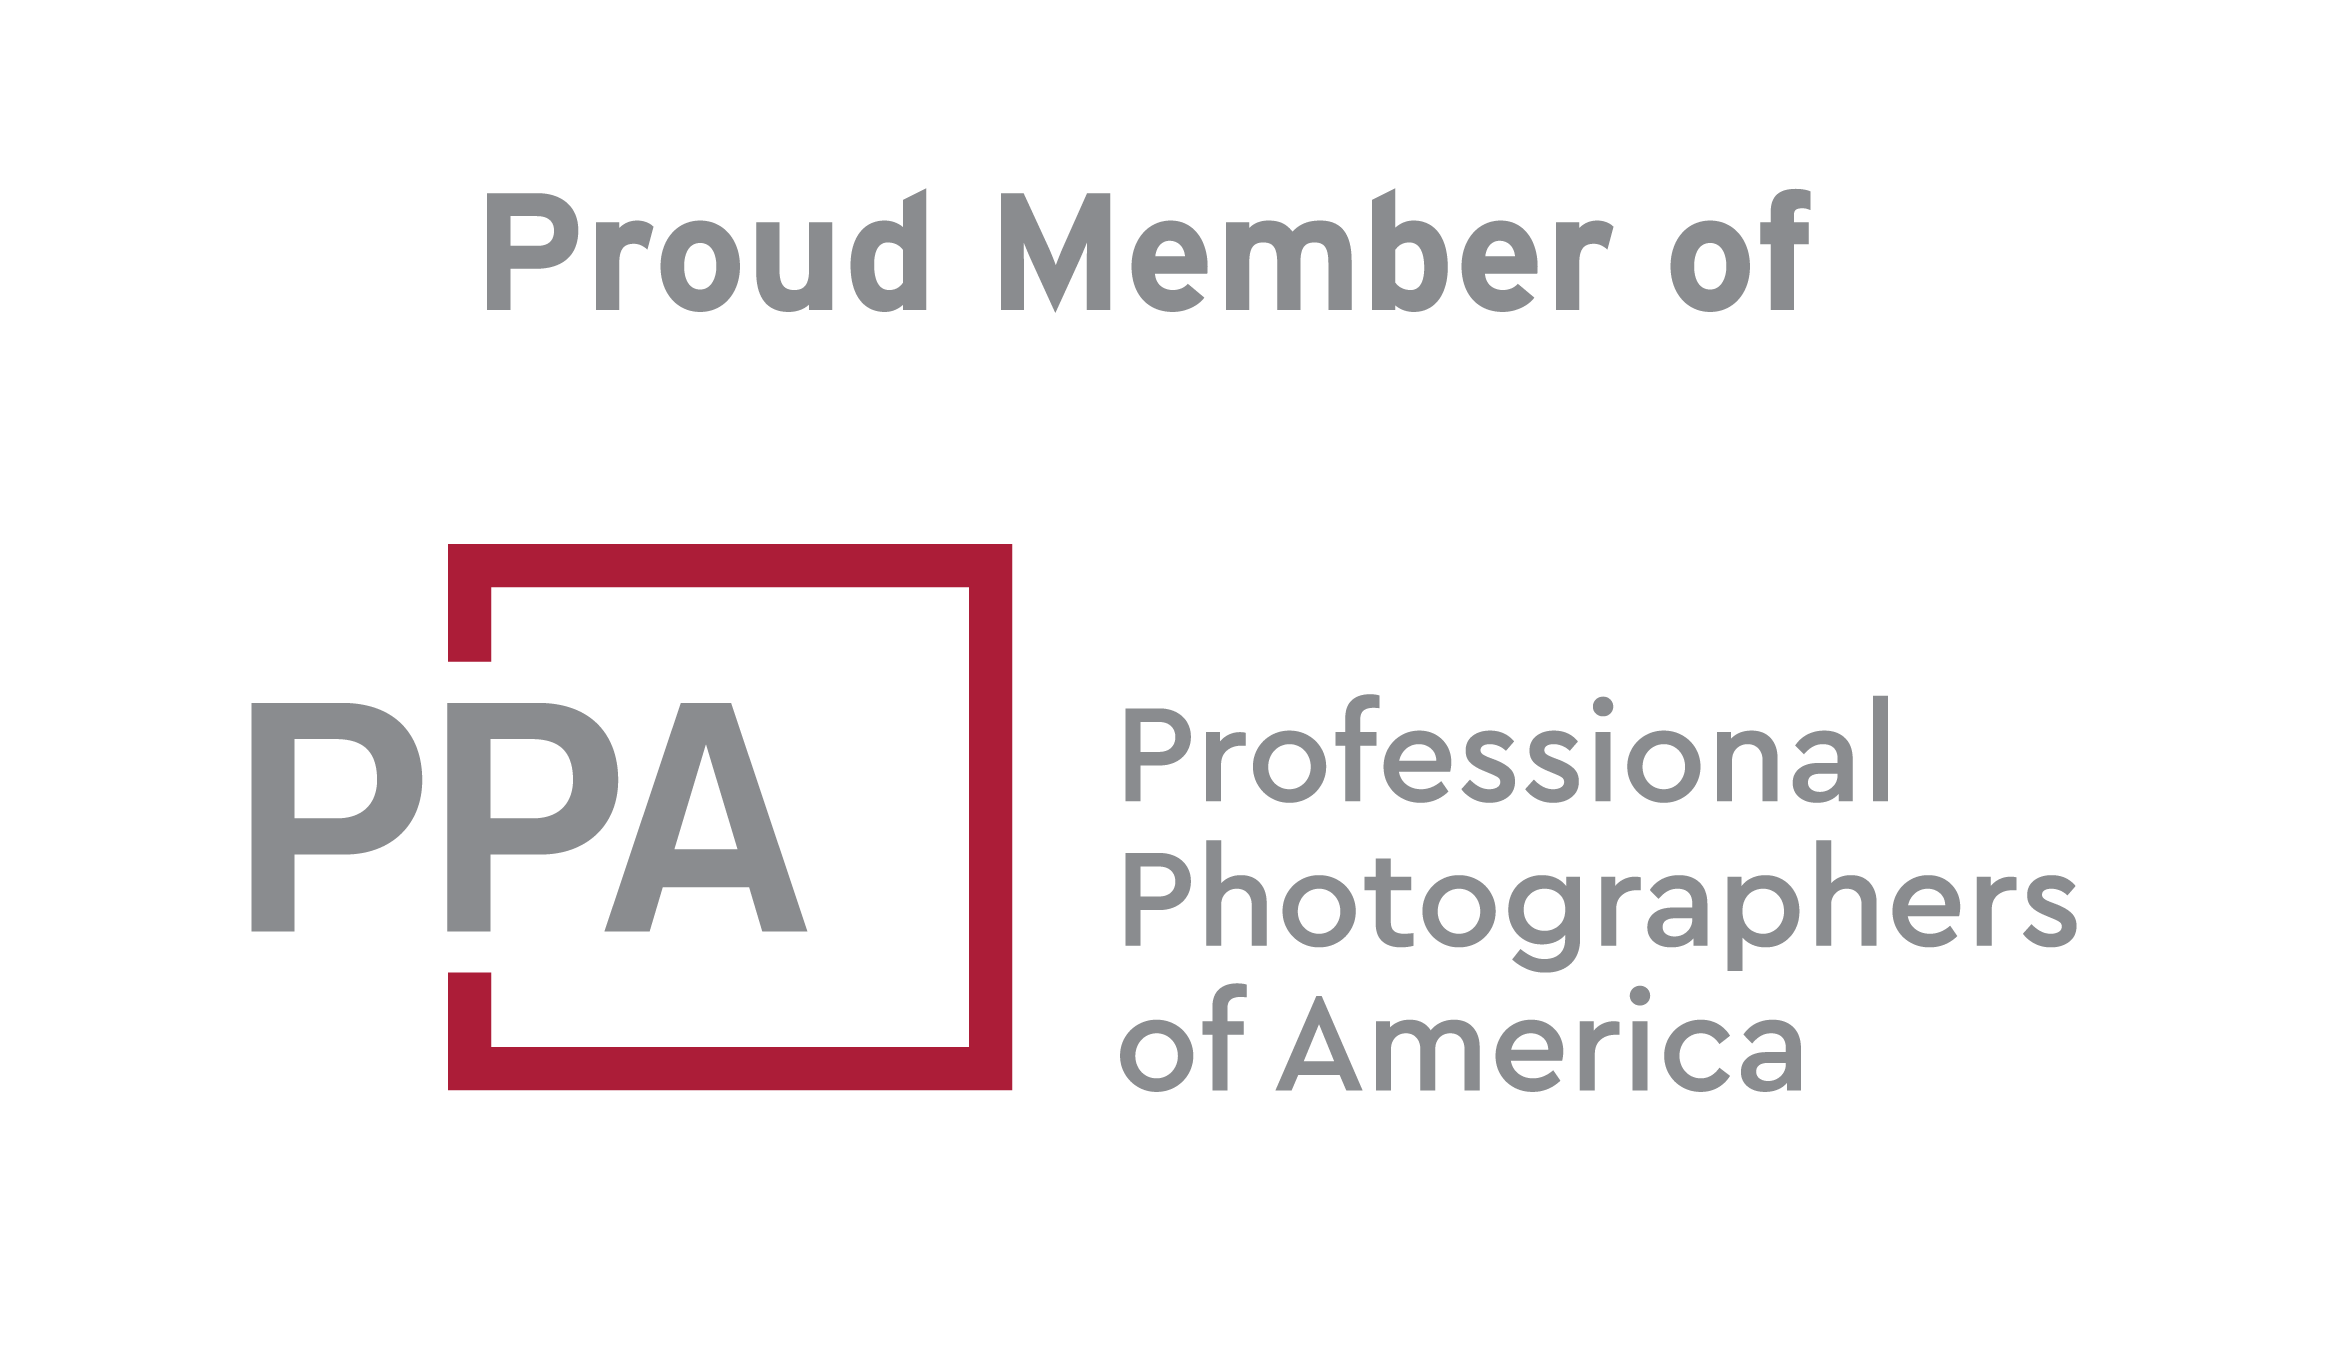 PPA, Professional Photographers of America